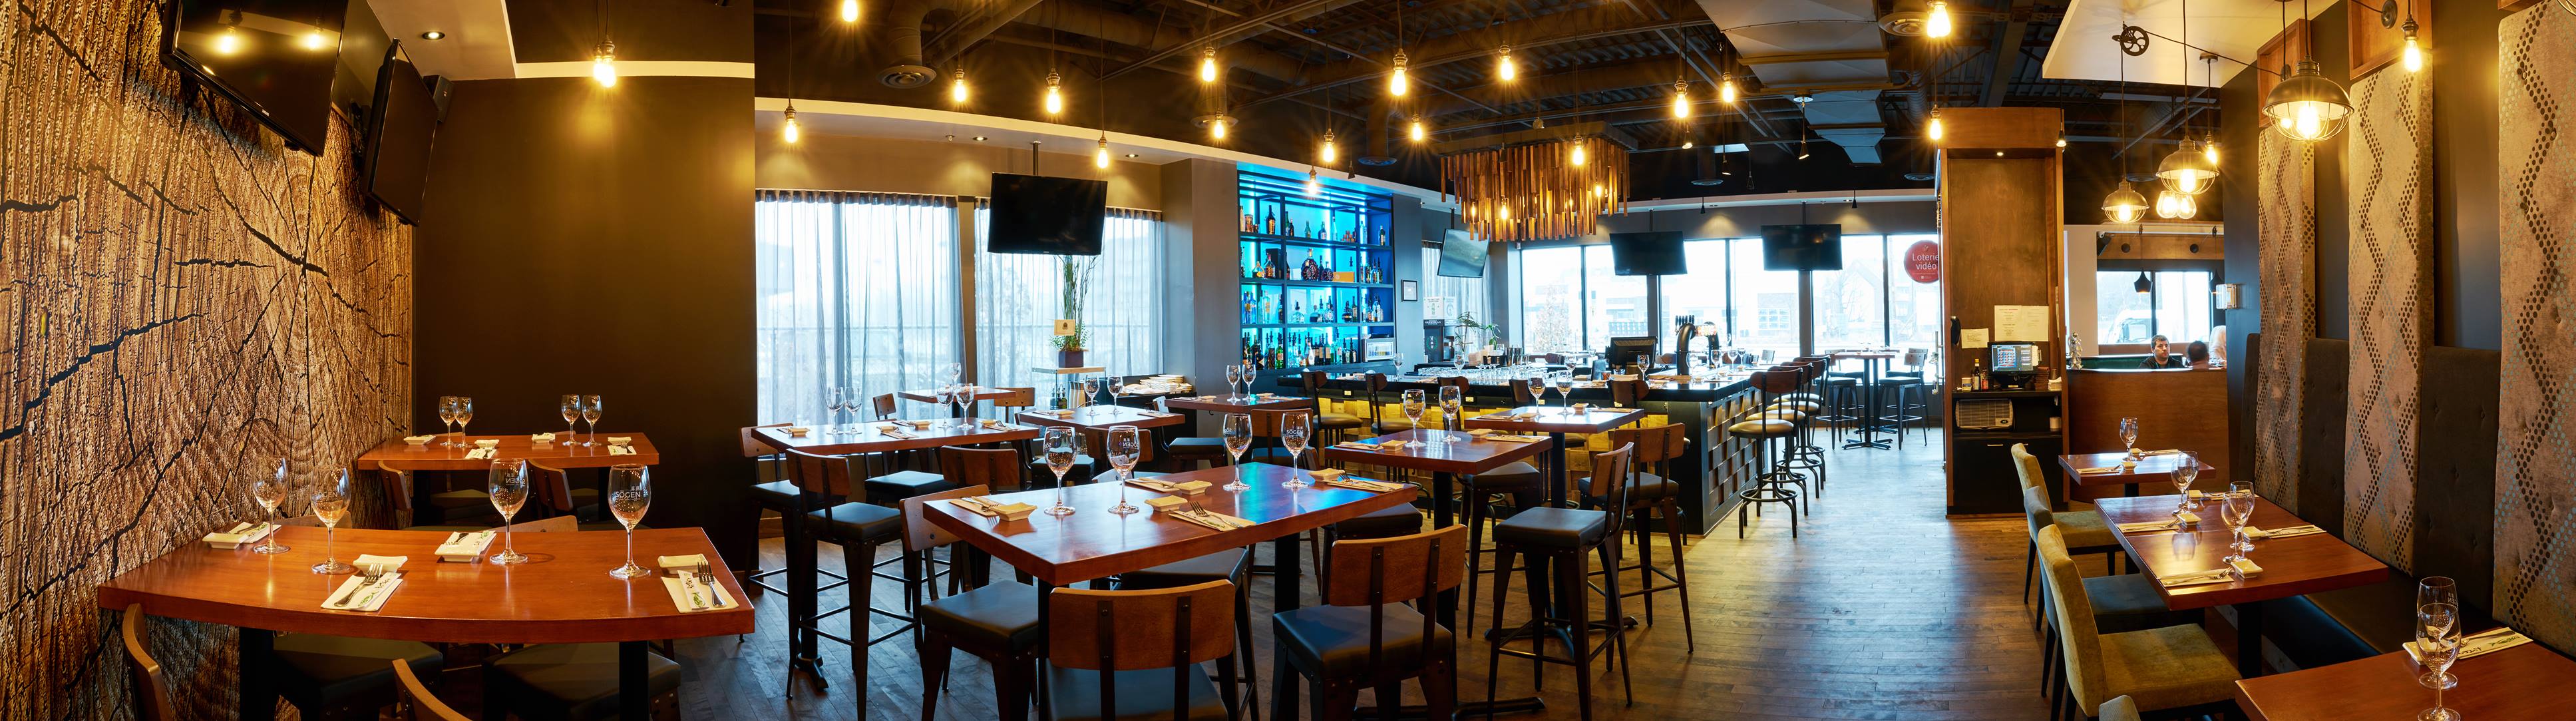 Sogen - Resto Bar, Sushi et Grillades